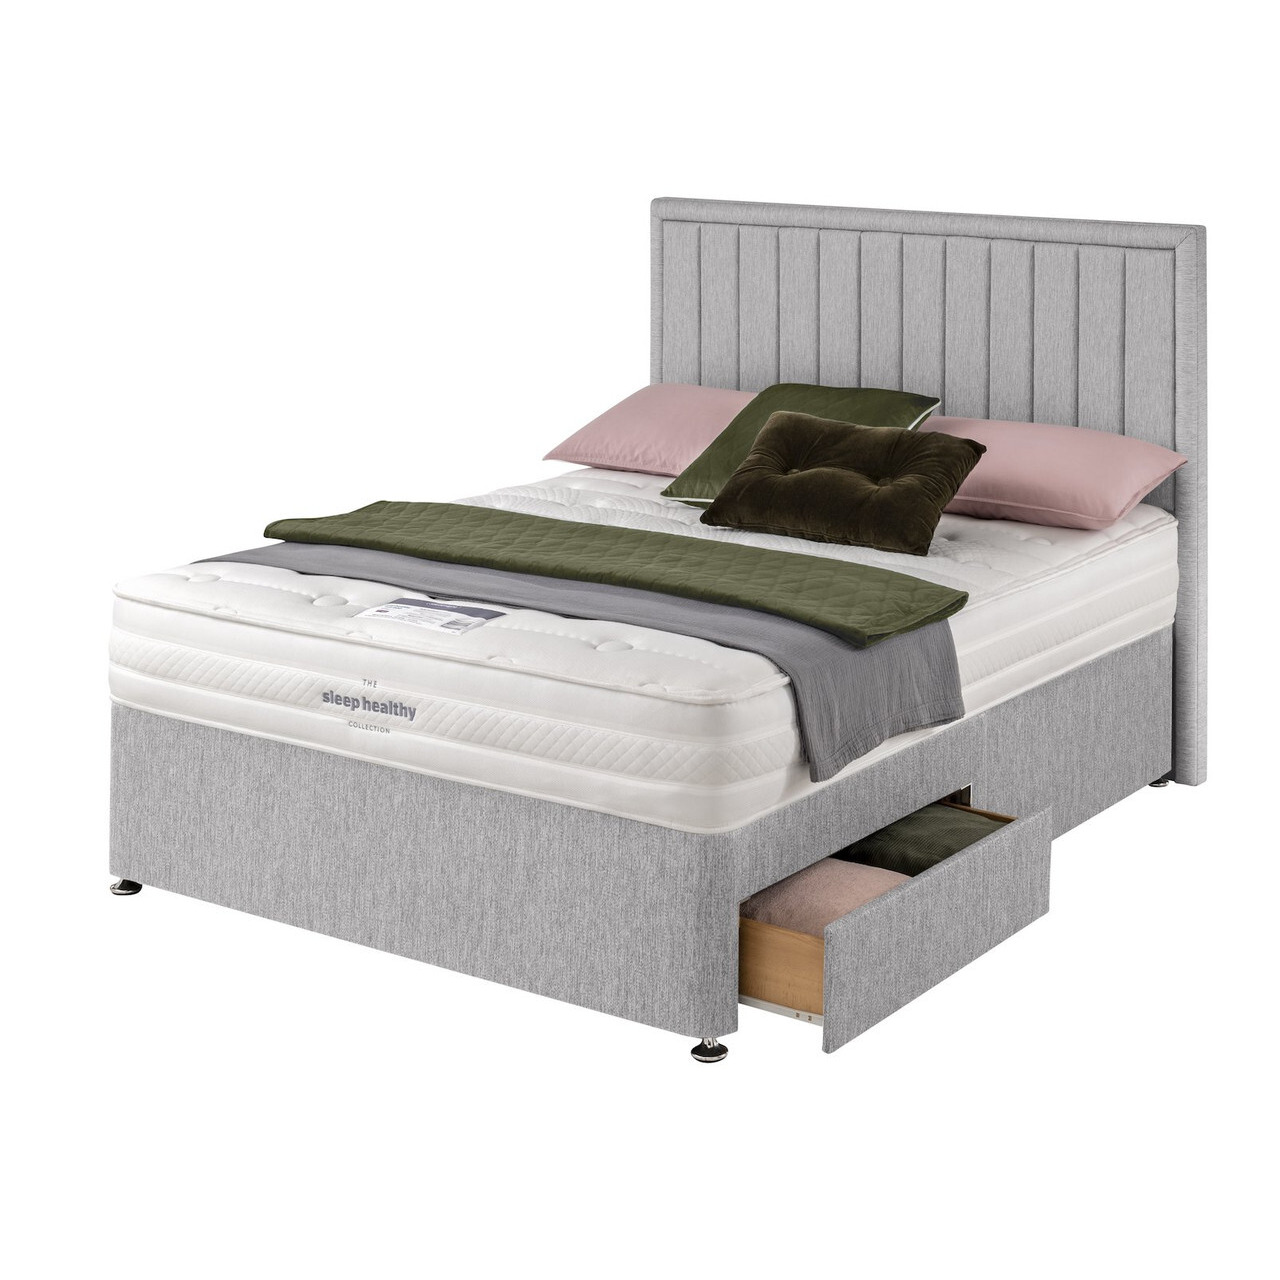 Silentnight Sleep Healthy Eco 600 Divan Bed Set - image 1